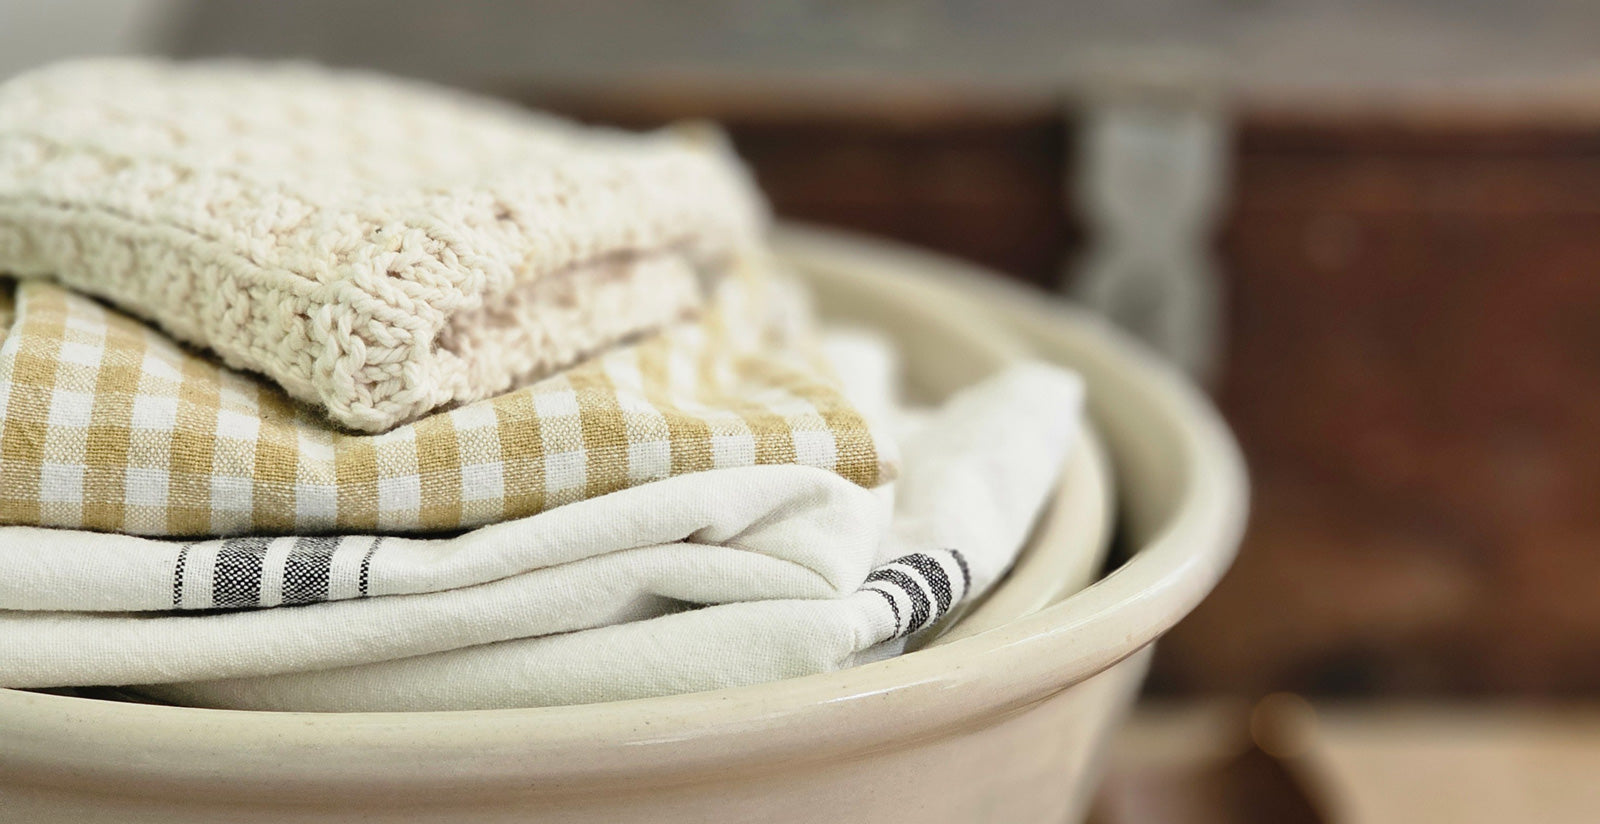 French Market Black Kitchen Towel Set - Retro Barn Country Linens